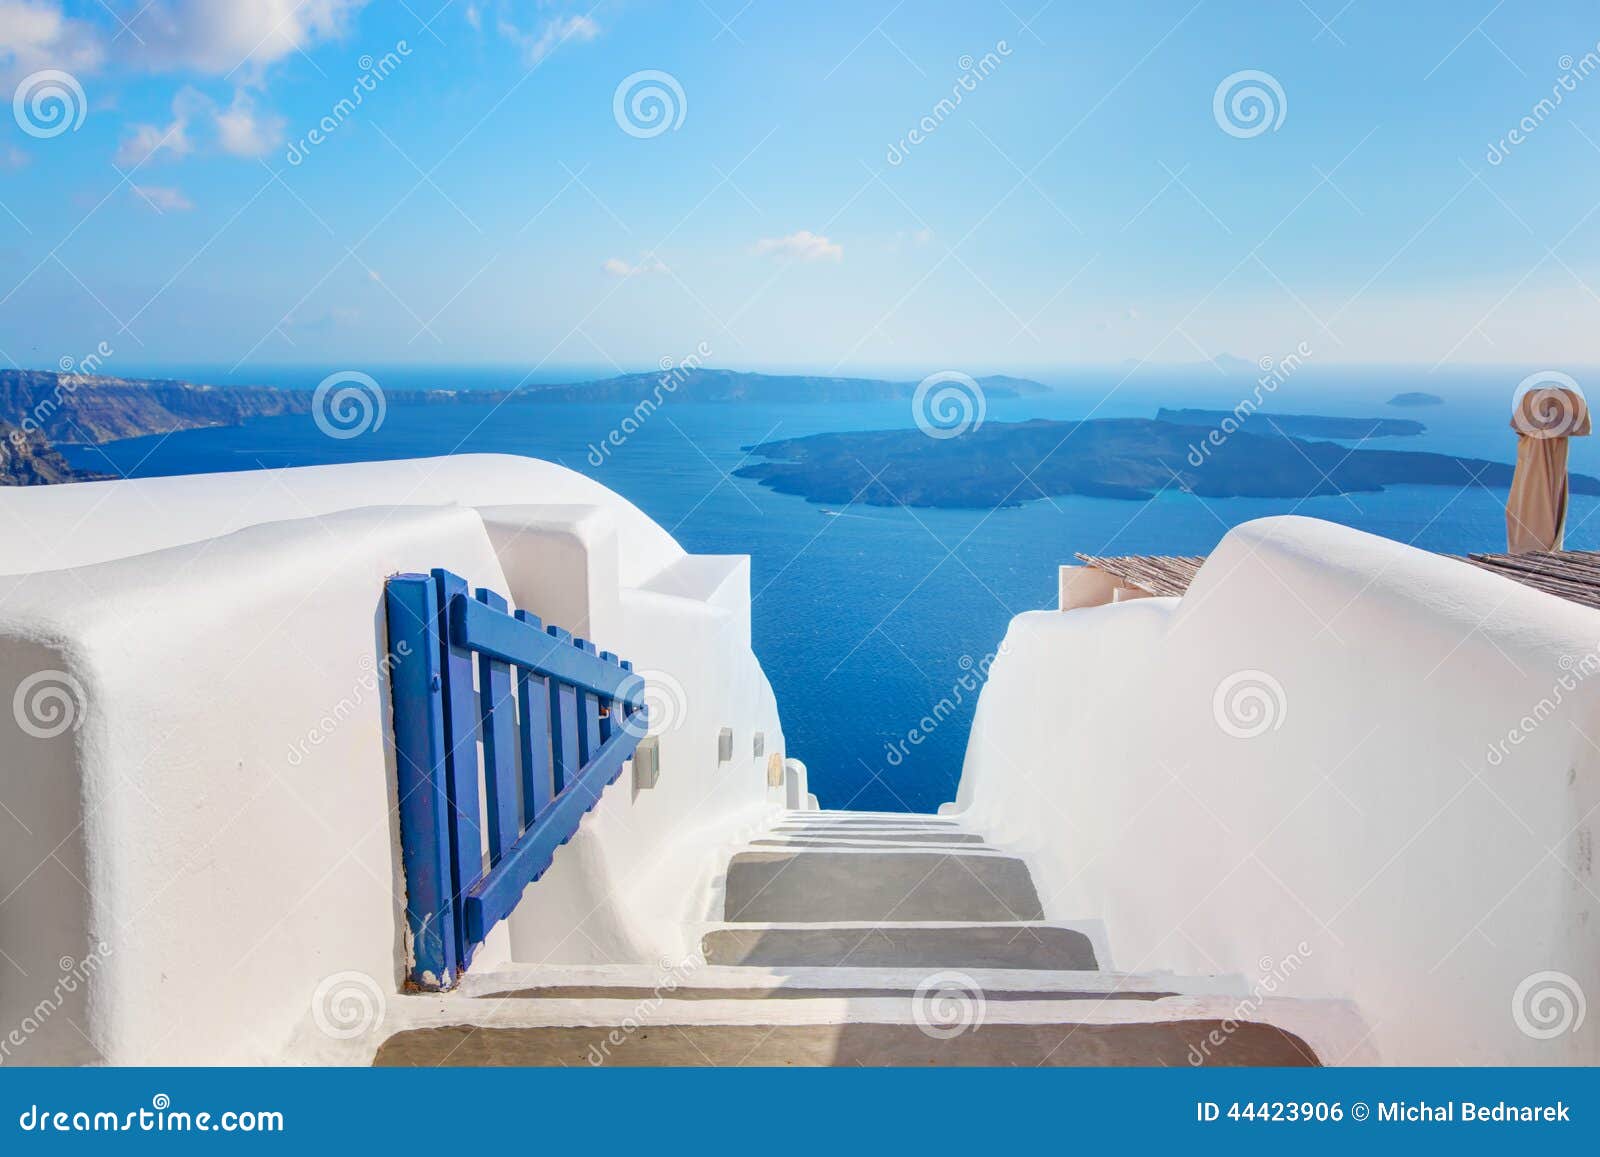 santorini, greece. open blue door with aegean sea view and caldera.